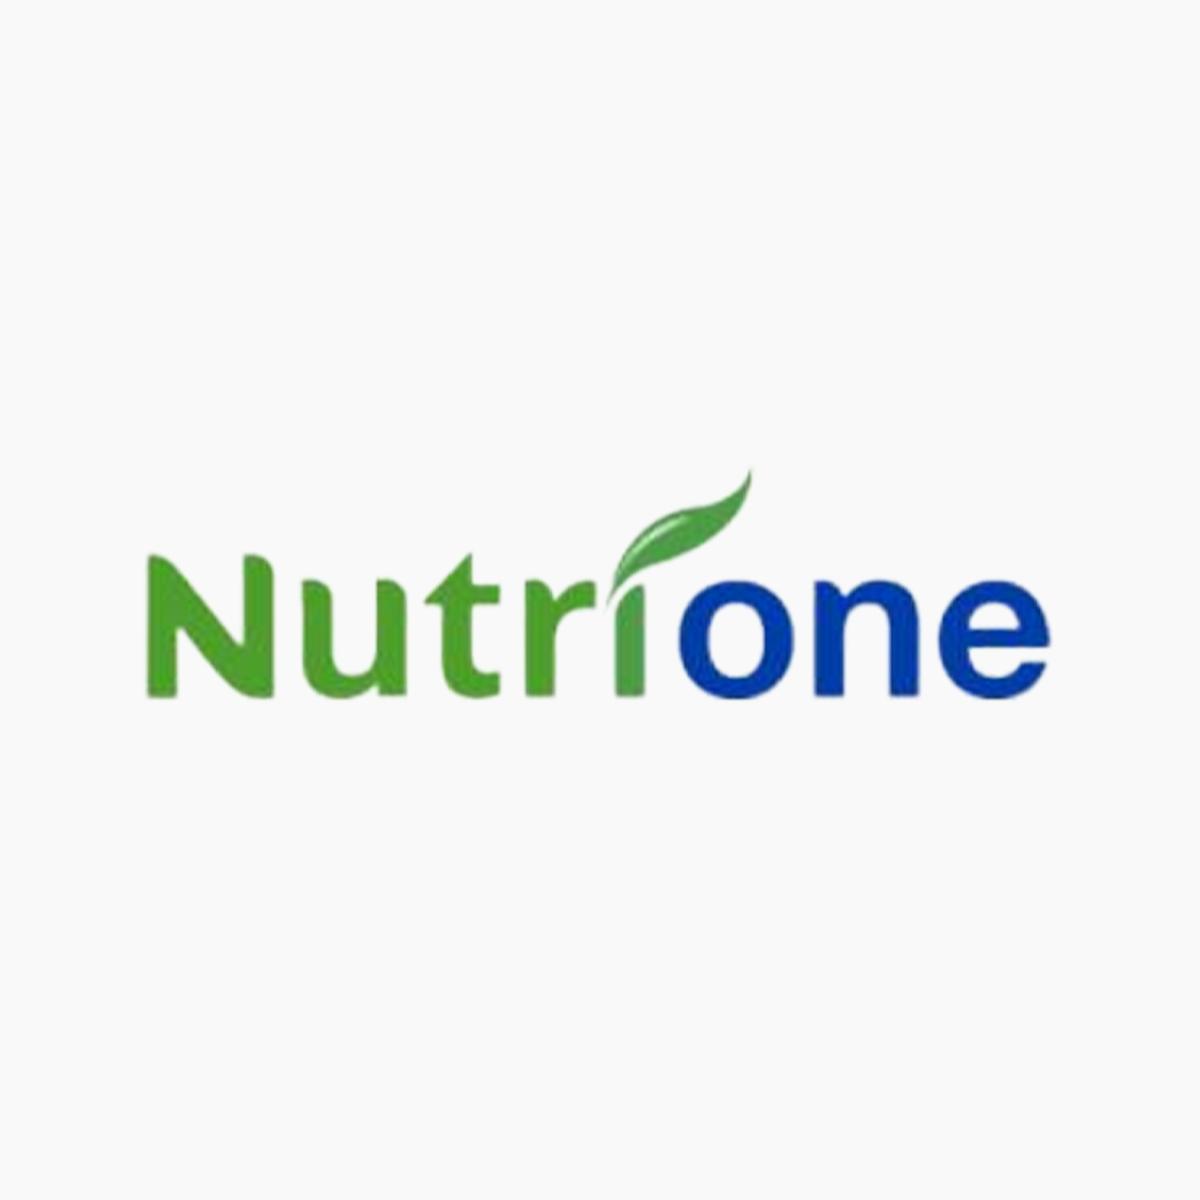 Nutrione-logo-image